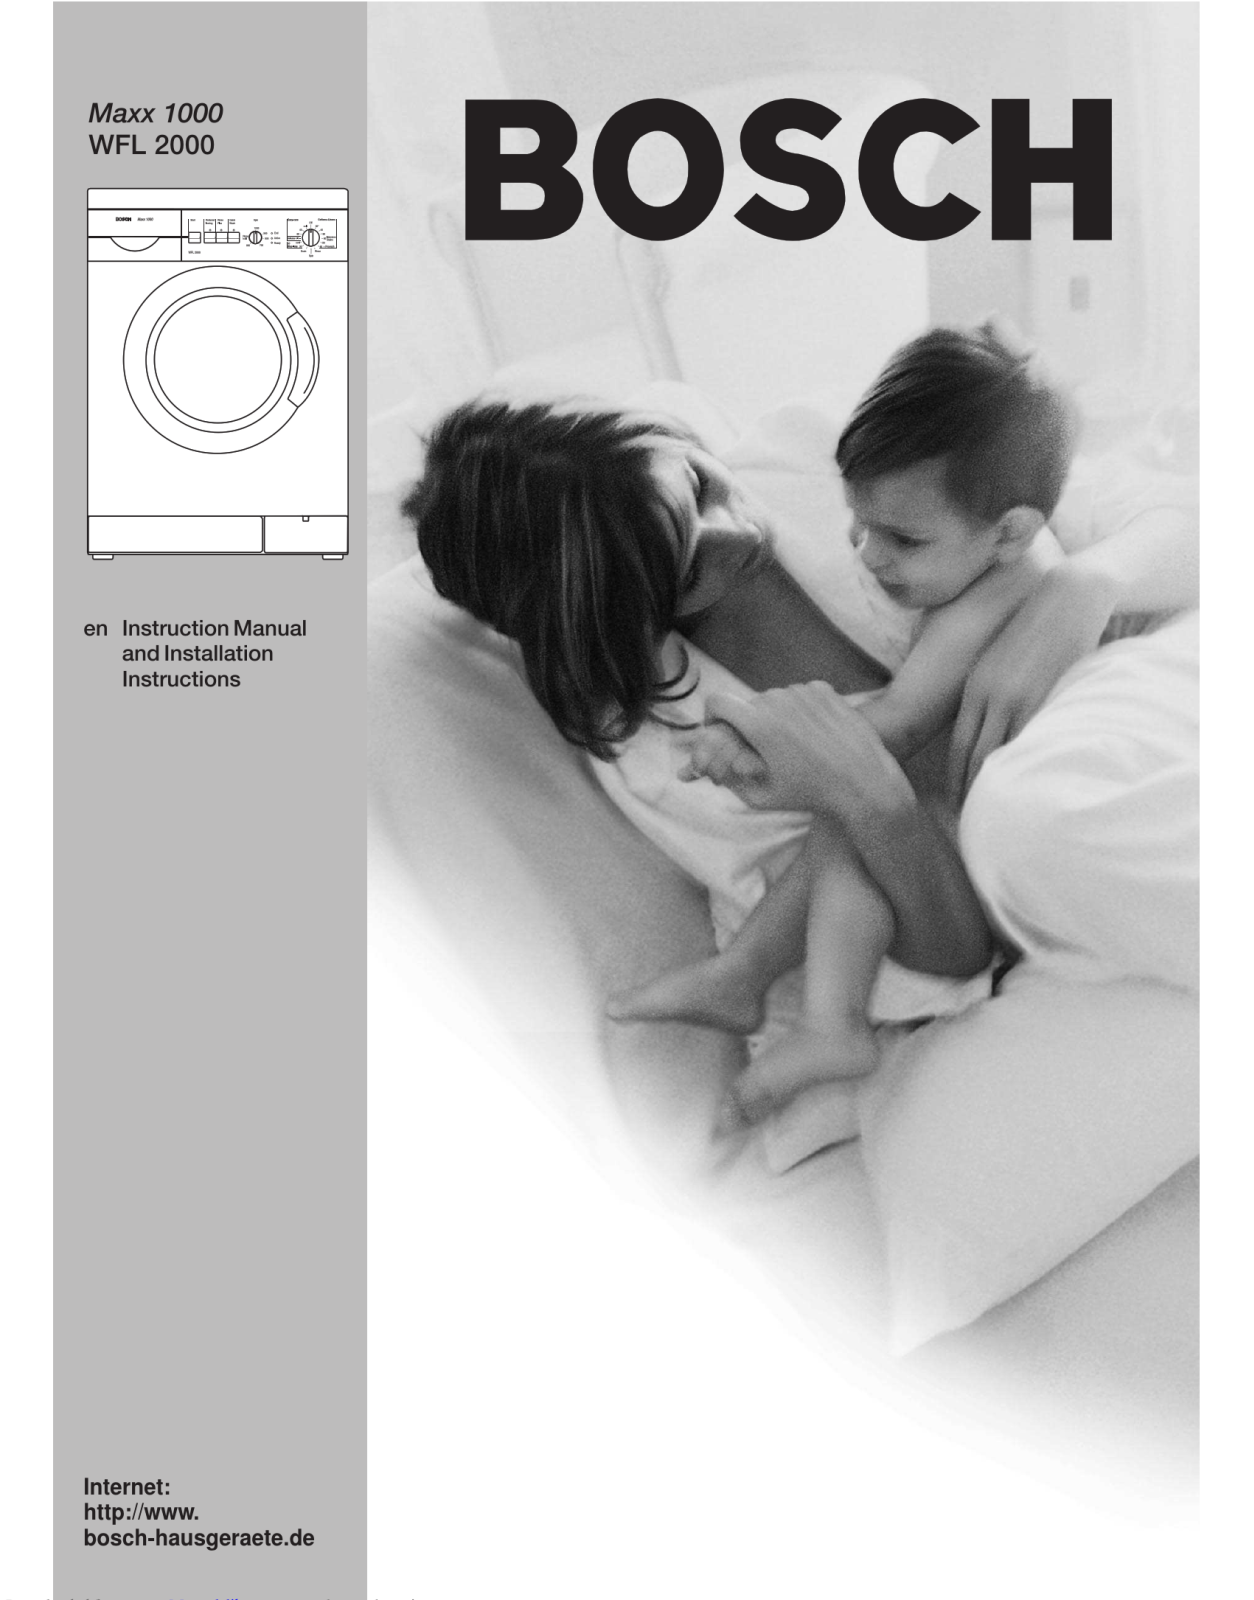 Bosch Maxx 1000 Instruction manual and installation instructions